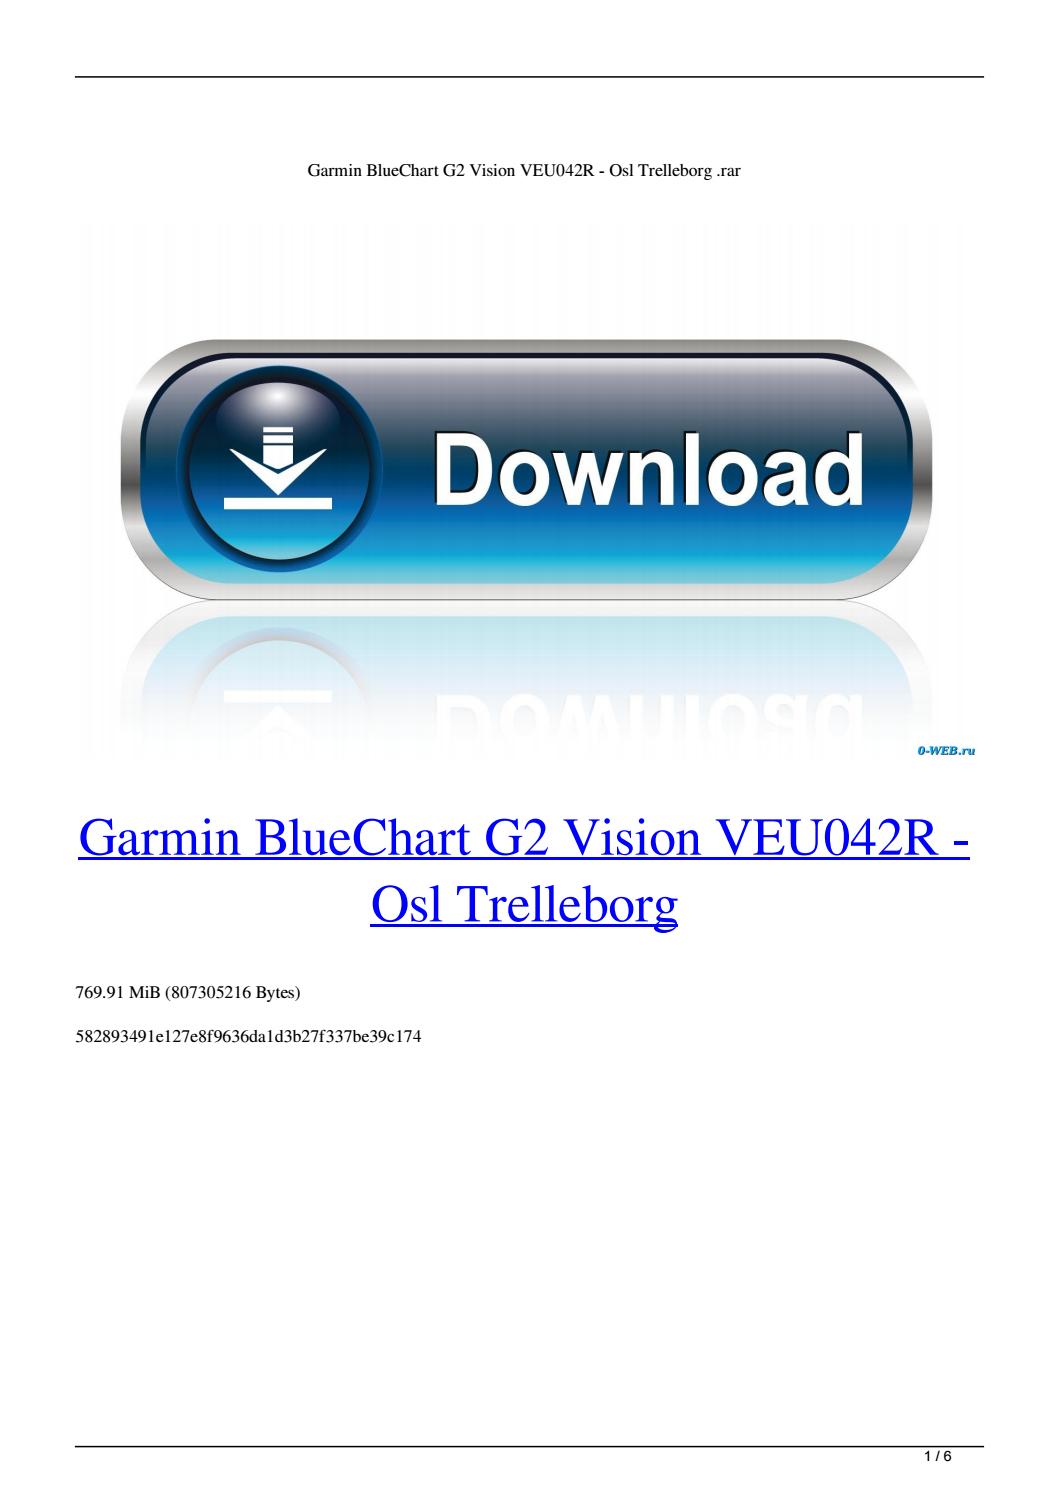 Free Garmin Bluechart Download